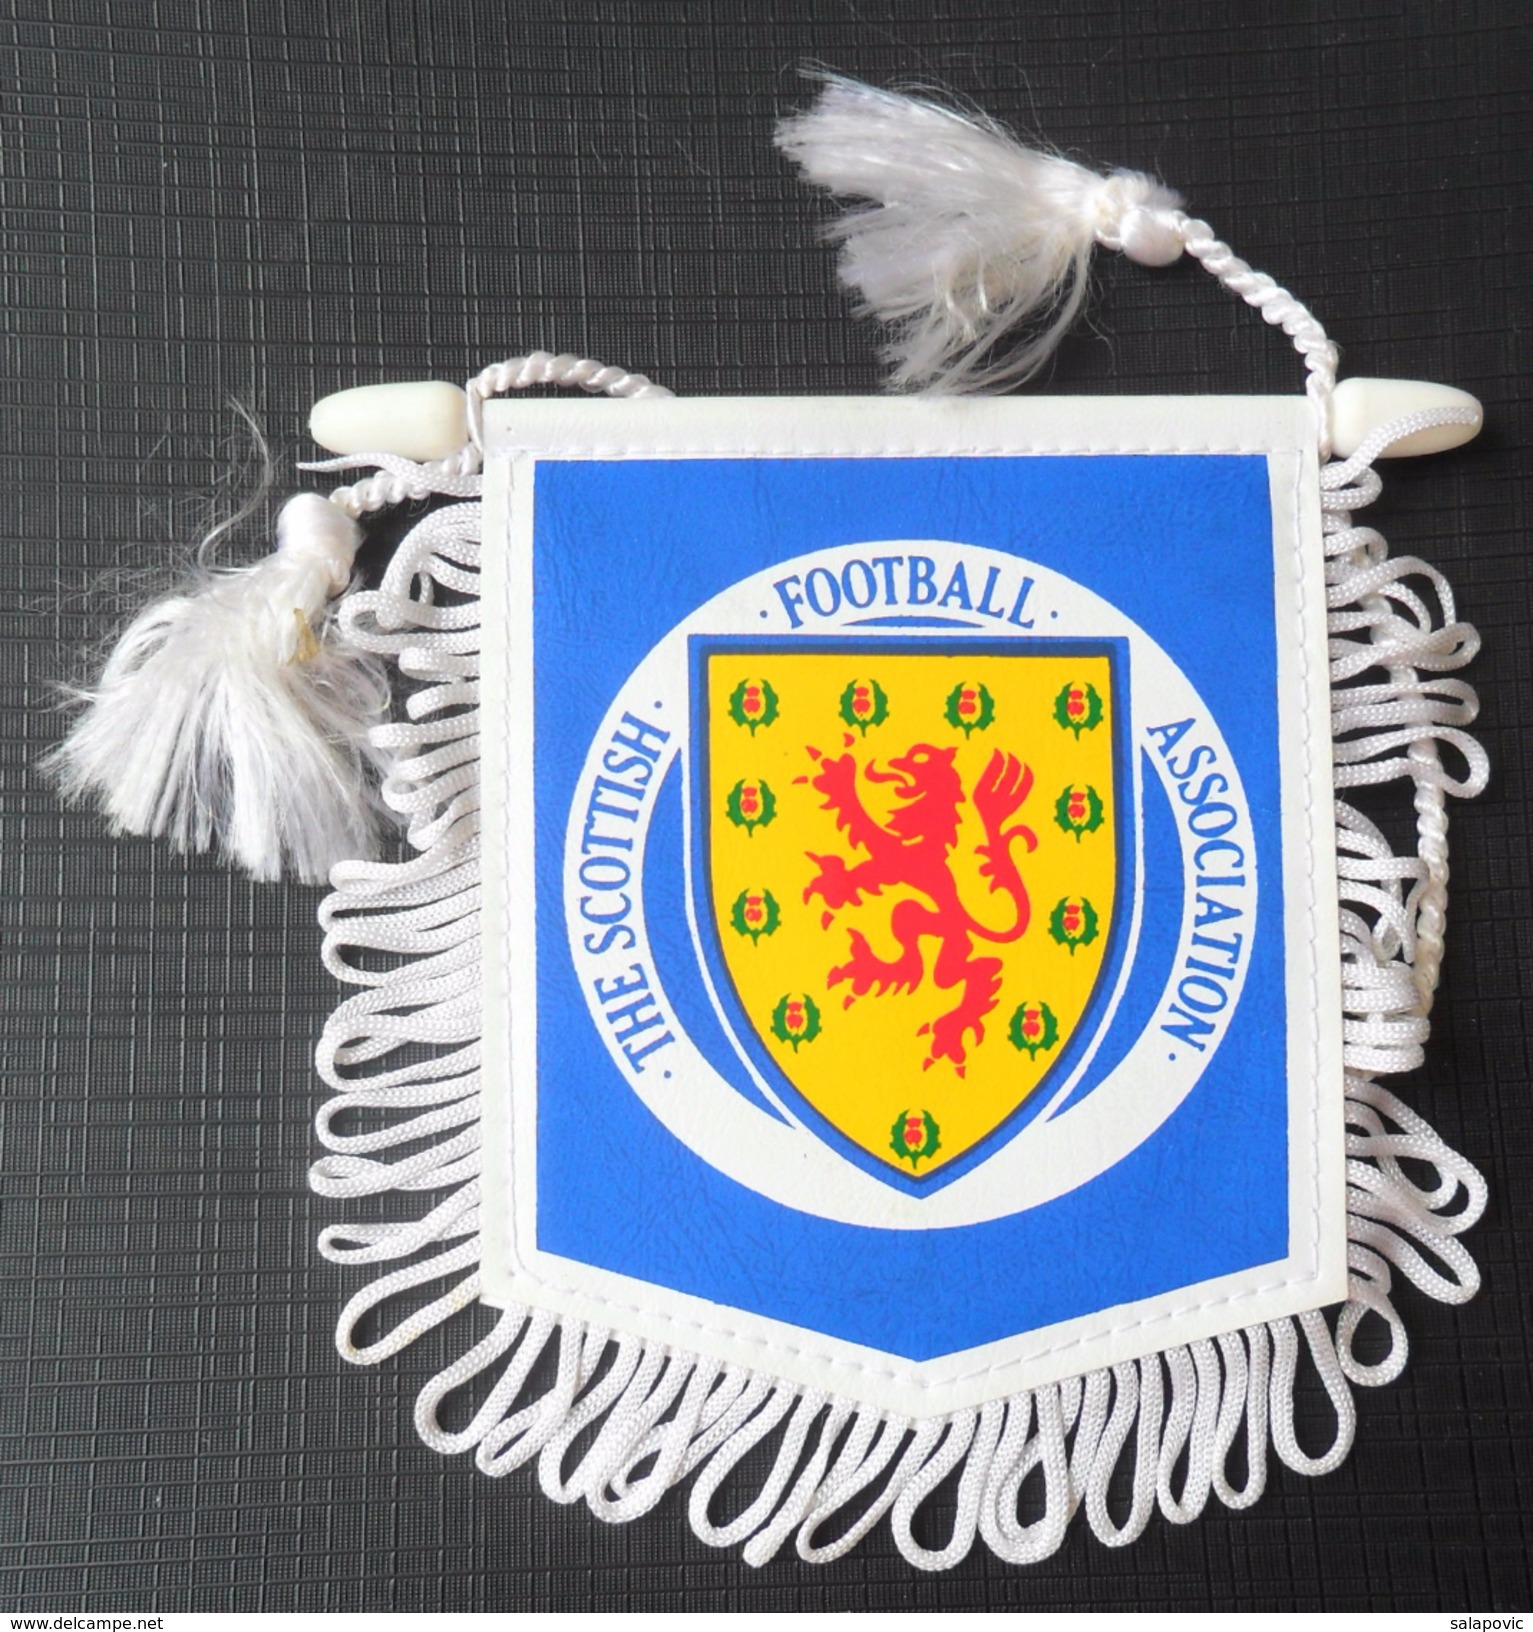 Scottish Football Association FOOTBALL CLUB, SOCCER / FUTBOL / CALCIO OLD PENNANT, SPORTS FLAG - Uniformes Recordatorios & Misc